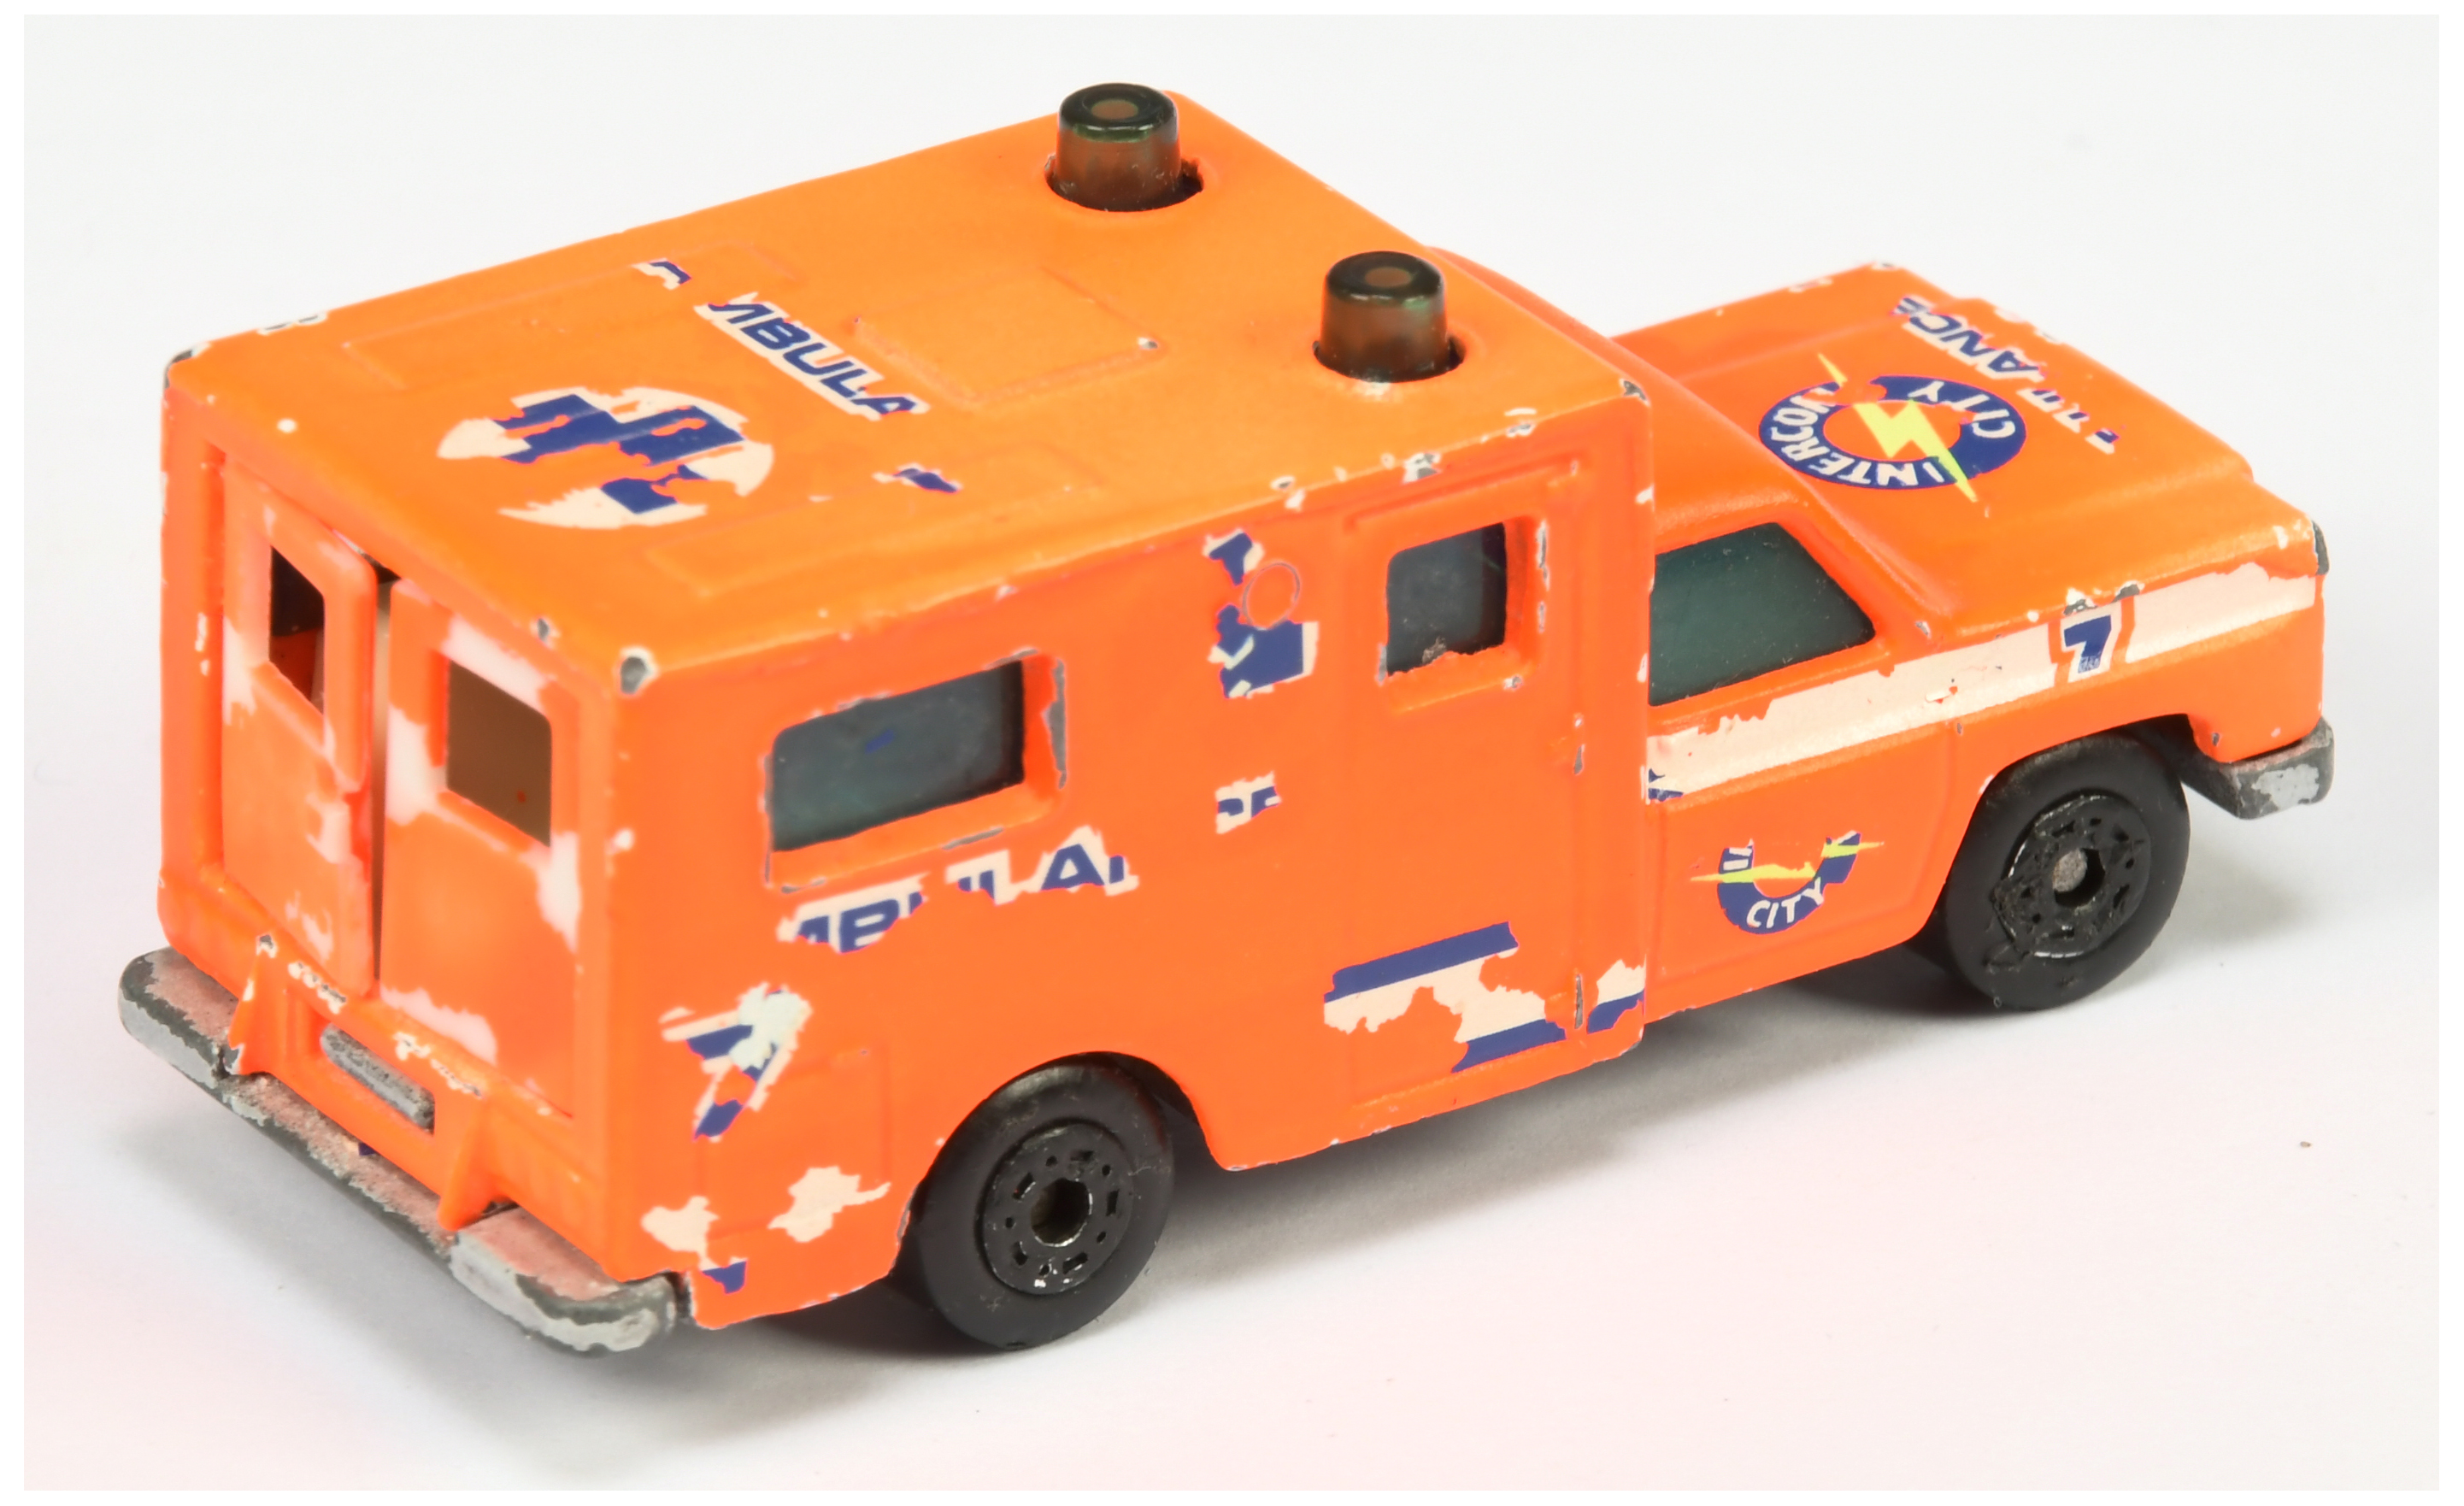 Matchbox Superfast 41e Chevrolet Ambulance Pre-production Trial model - flourescent orange red wi... - Image 2 of 2